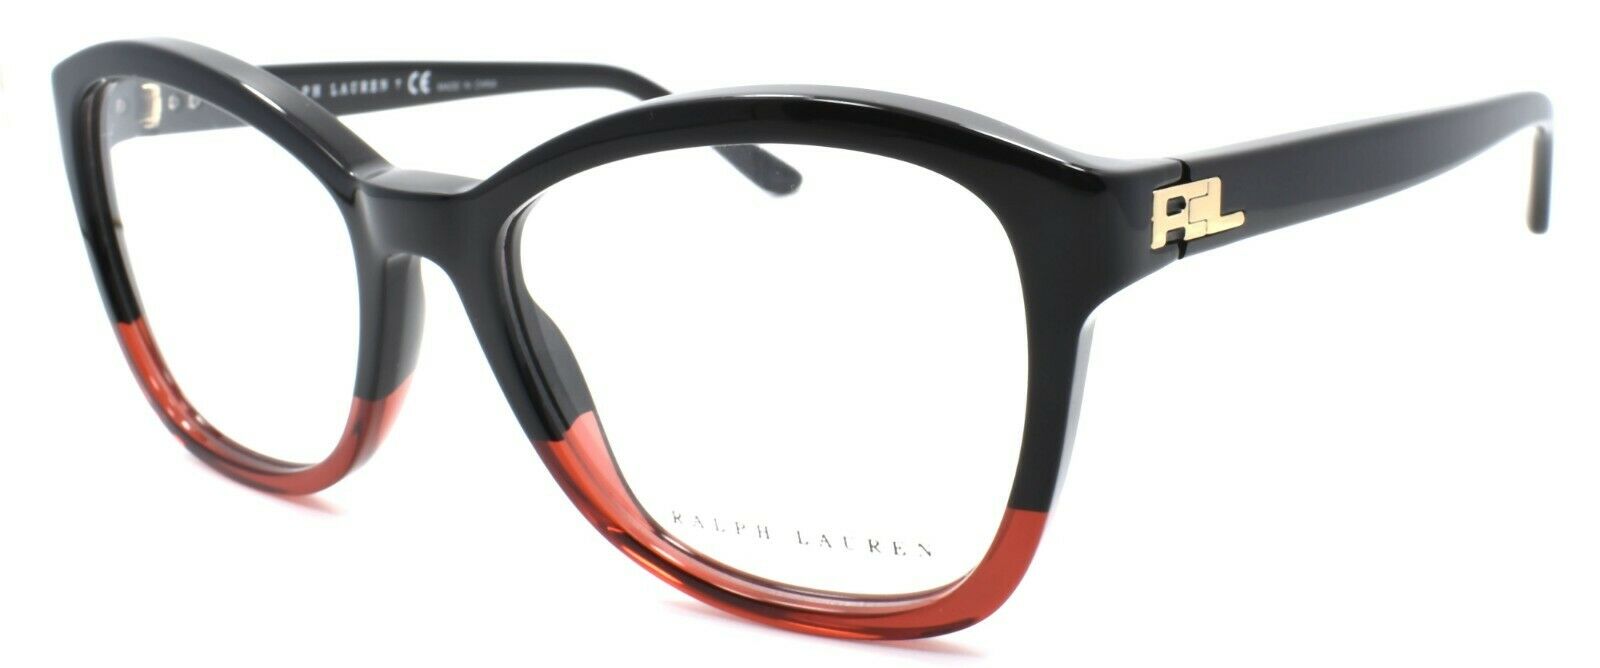 1-Ralph Lauren RL6142 5583 Women's Eyeglasses Frames 51-17-140 Bordeaux-8053672474923-IKSpecs